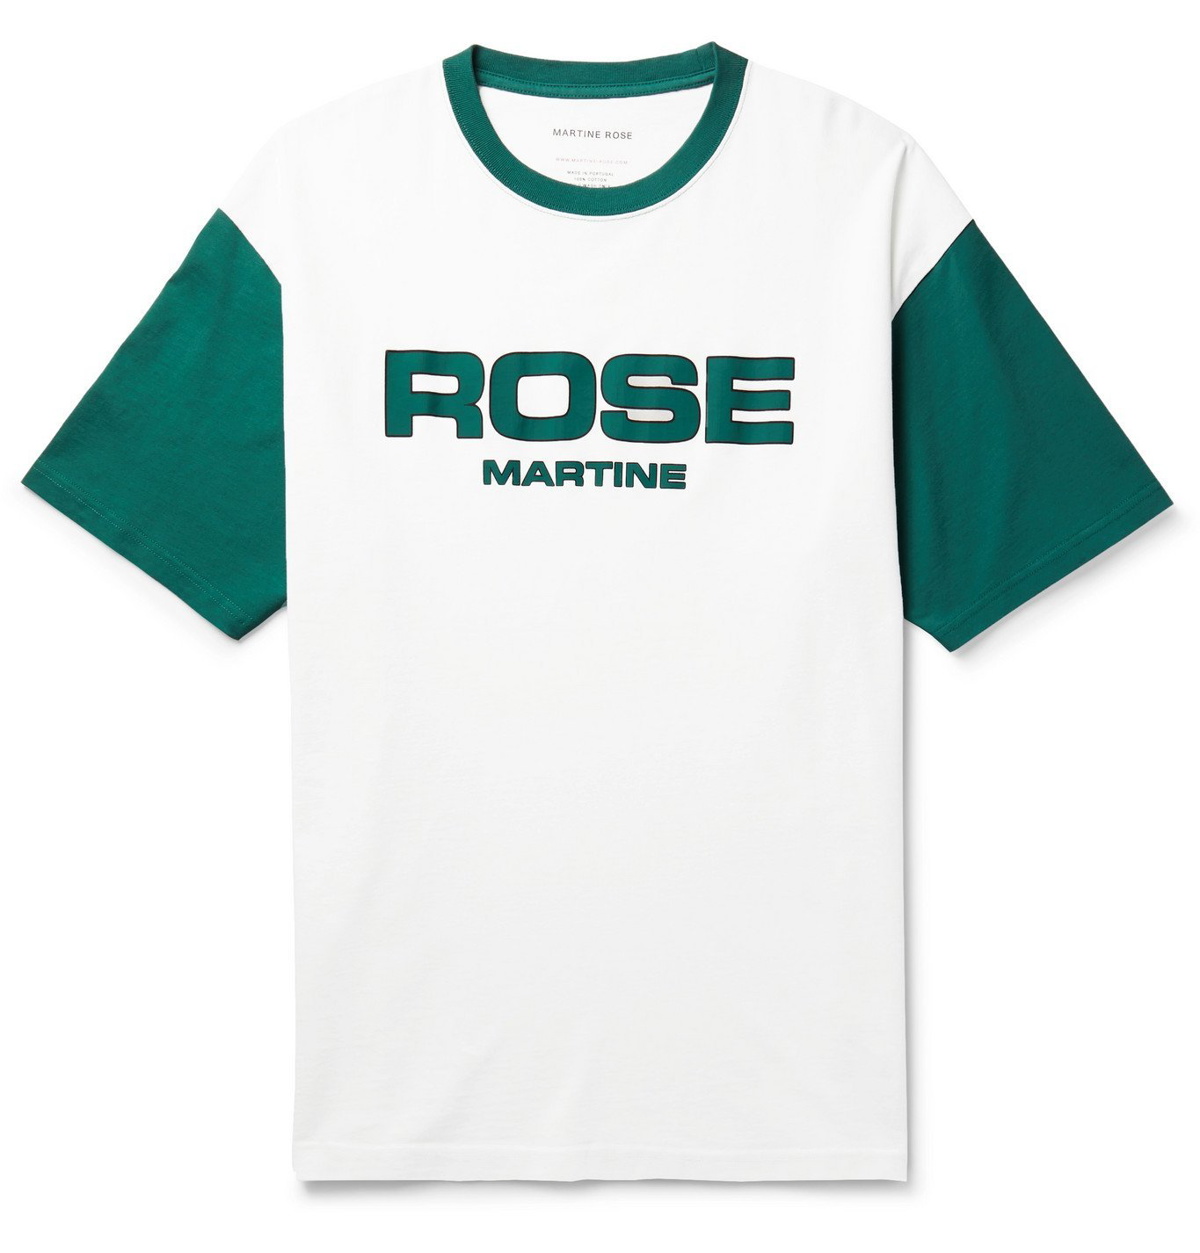 Martine Rose T-shirts